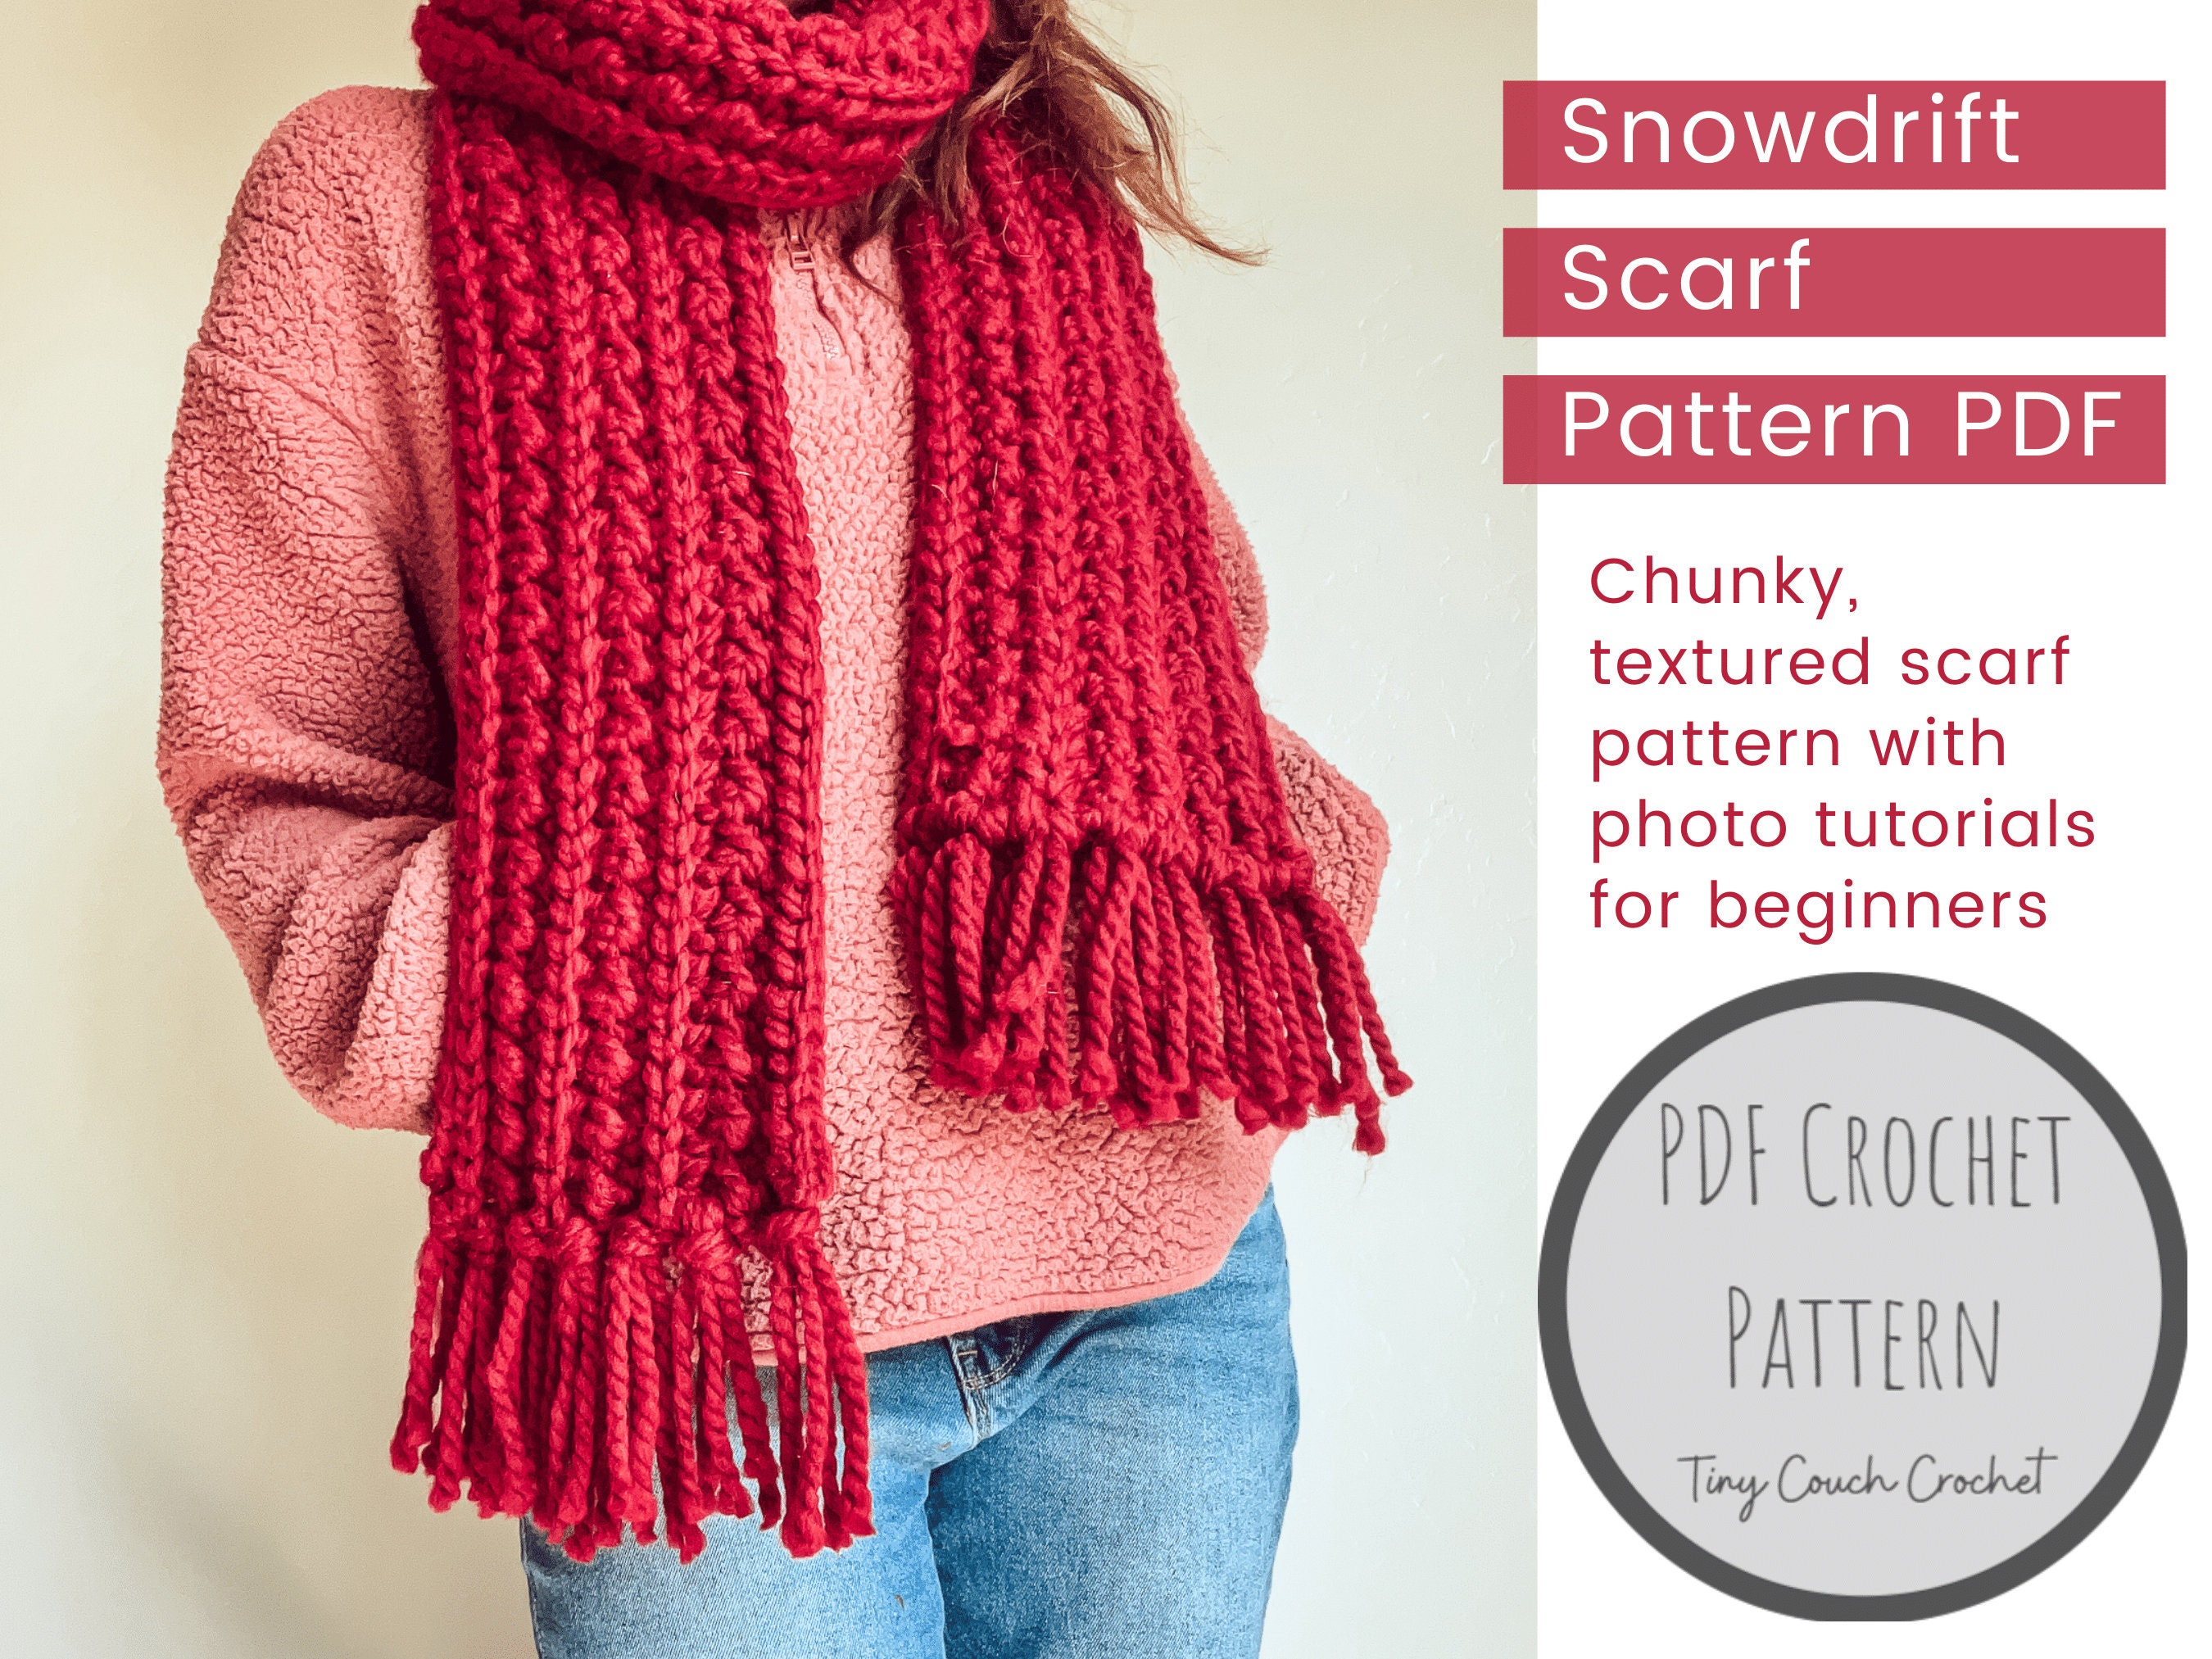 Chenille Scarf Knitting Pattern, Velvet Scarf Pattern, Chunky Velvet  Pattern, Chunky Chenille Pattern, Beginner Friendly Knit Pattern 